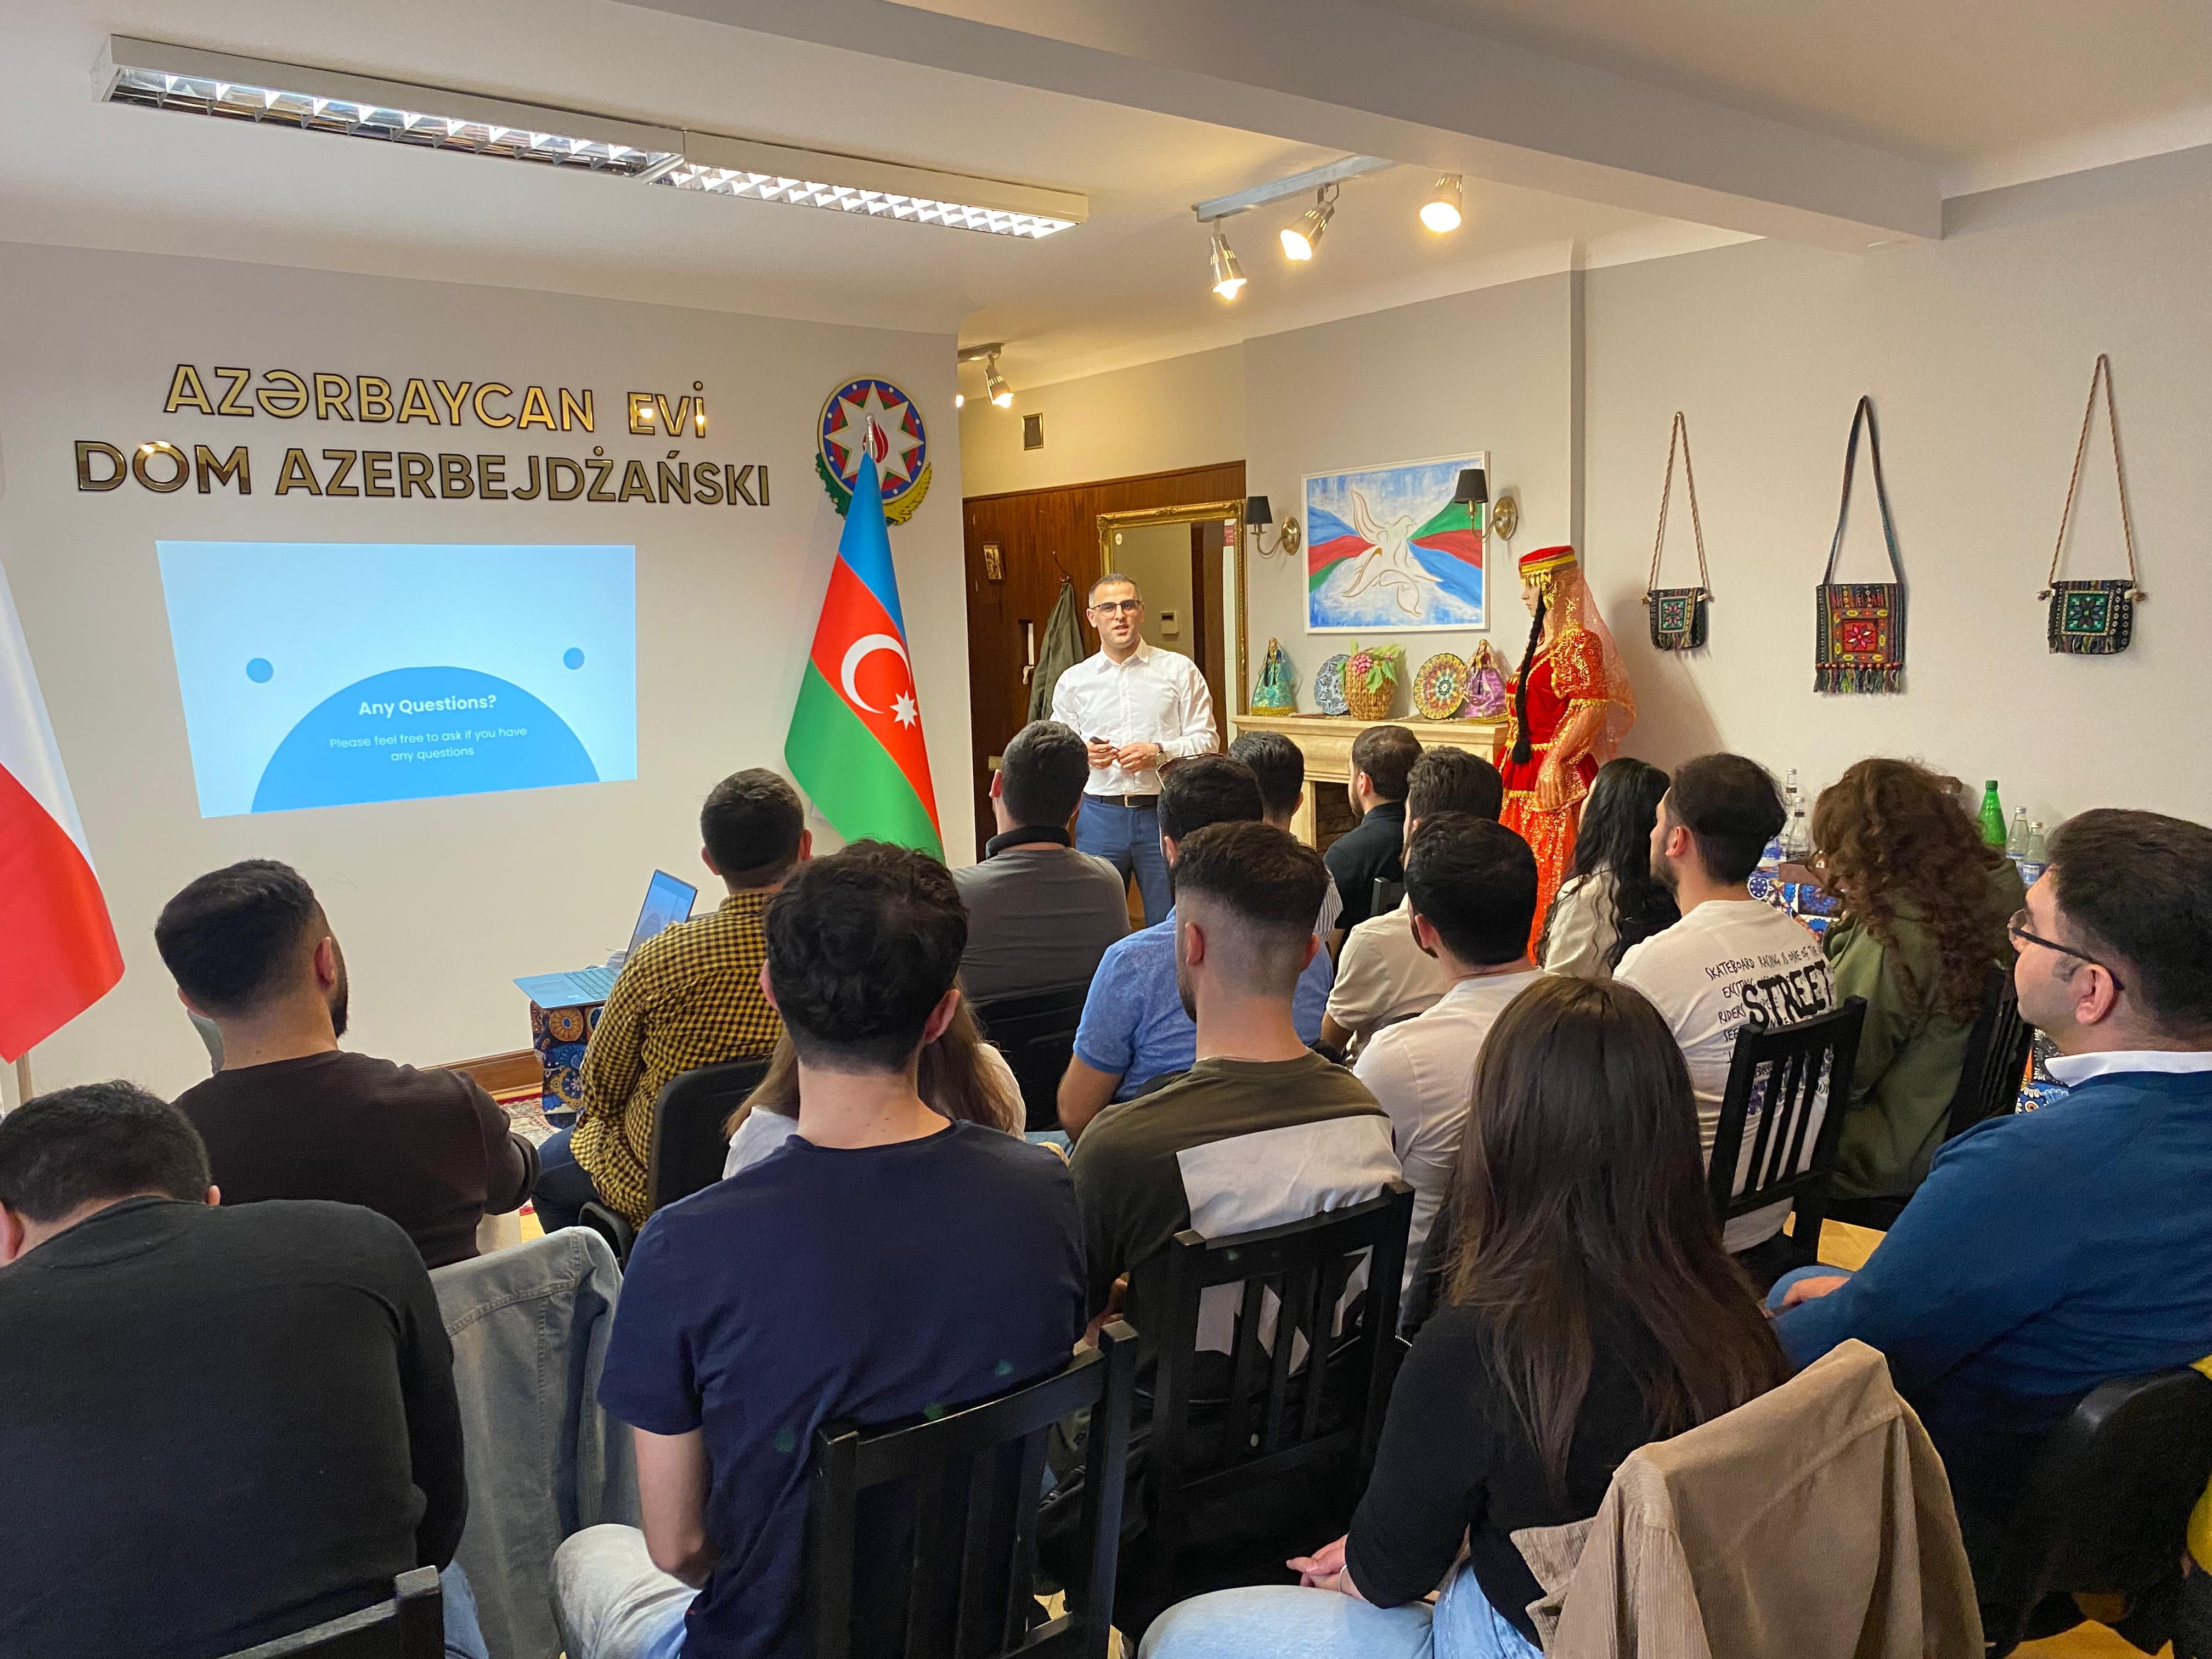 Career trainings program is being held in the Azerbaijani House in Warsaw